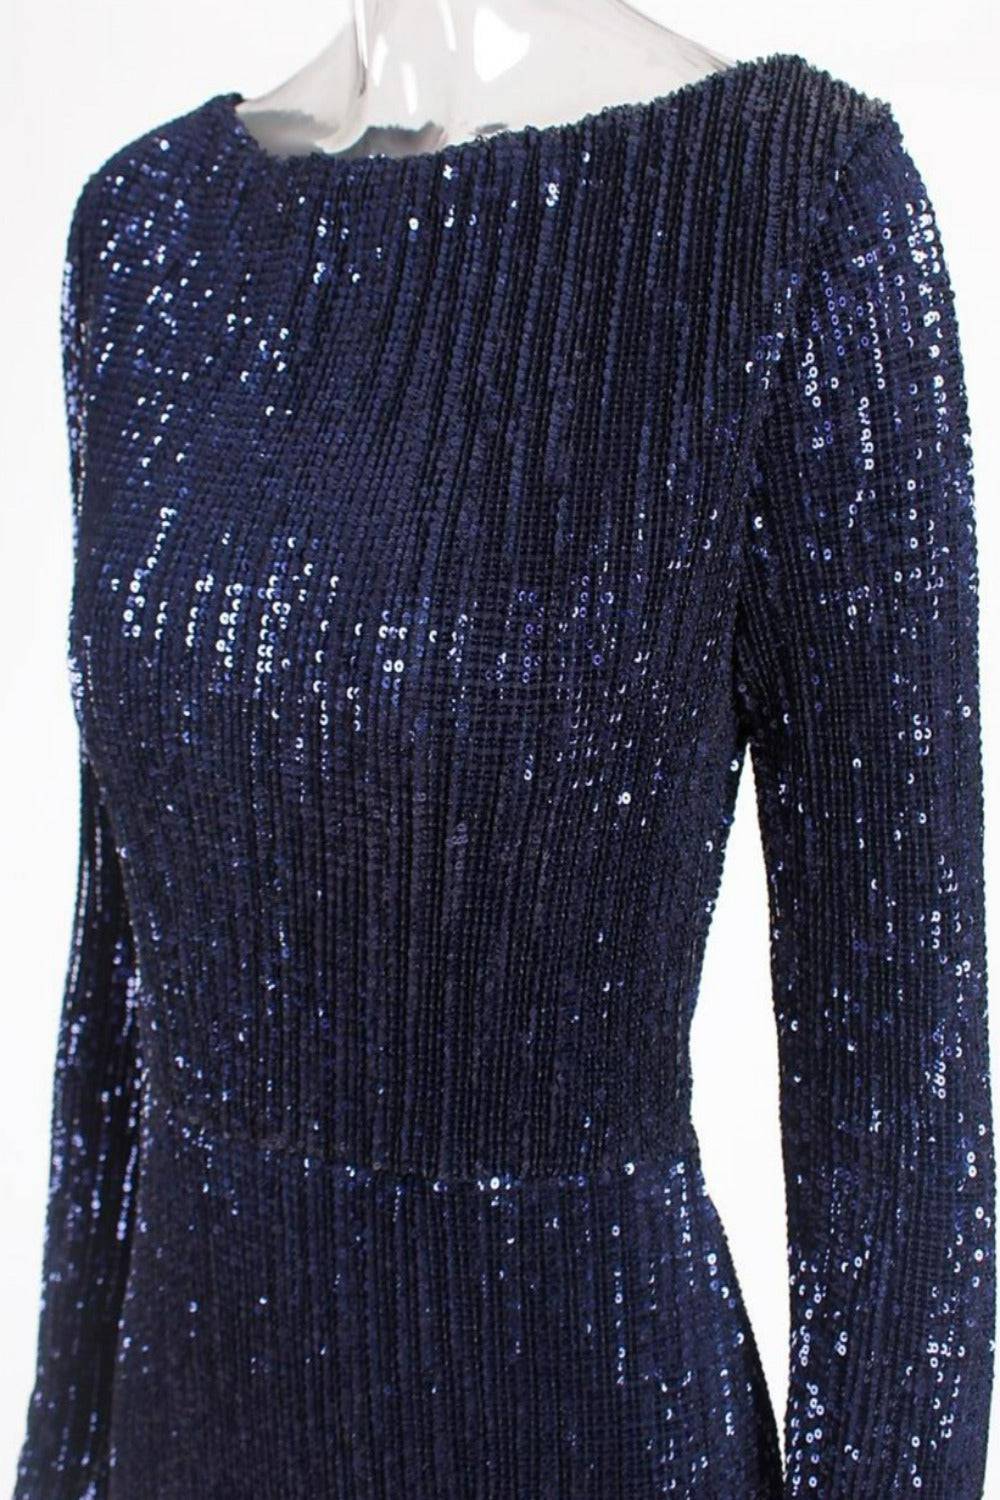 Navy Blue Long Sleeve Elastic Sequins Mermaid Maxi Dress - TGC Boutique - Evening Gown